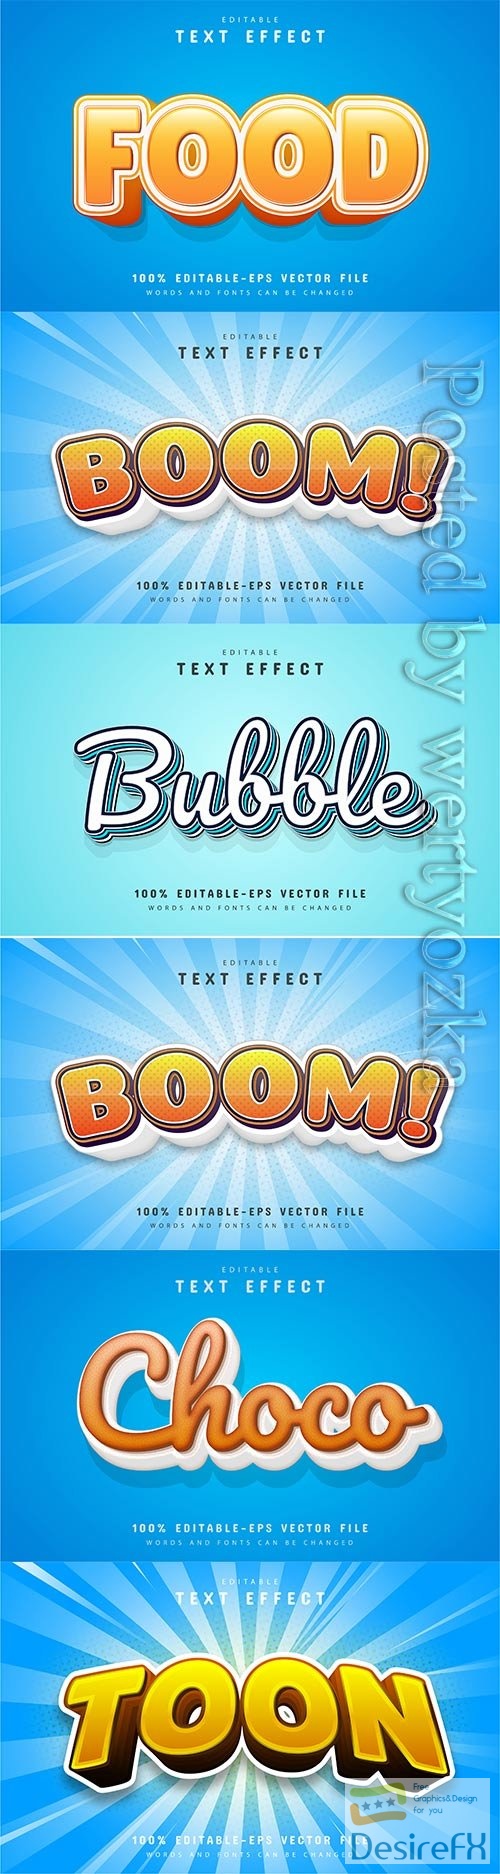 3d editable text style effect vector vol 404